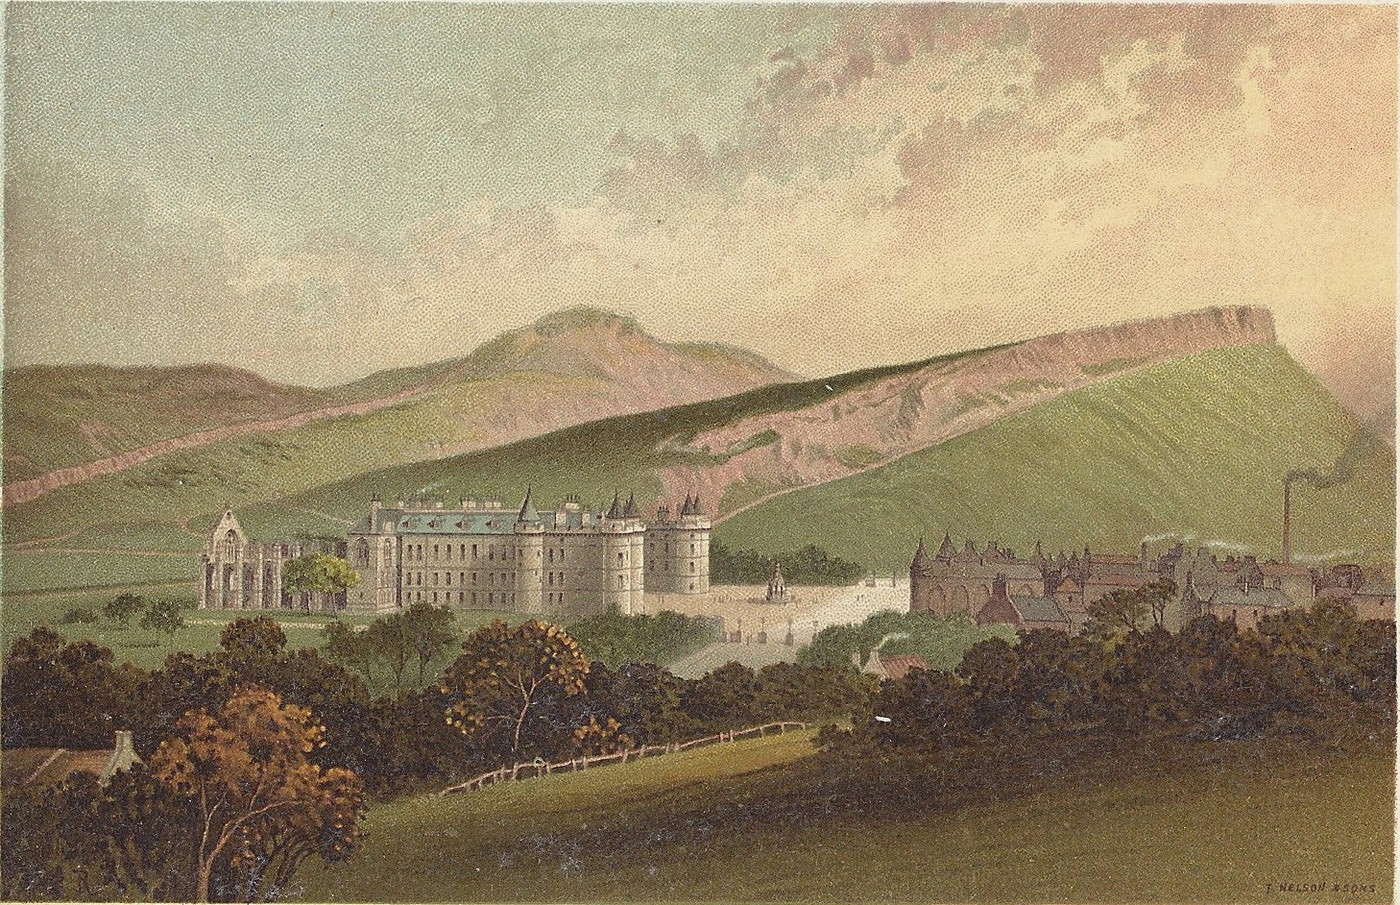 Holyrood Palace Arthur's Seat Salisbury Crags Edinburgh antique print 1889